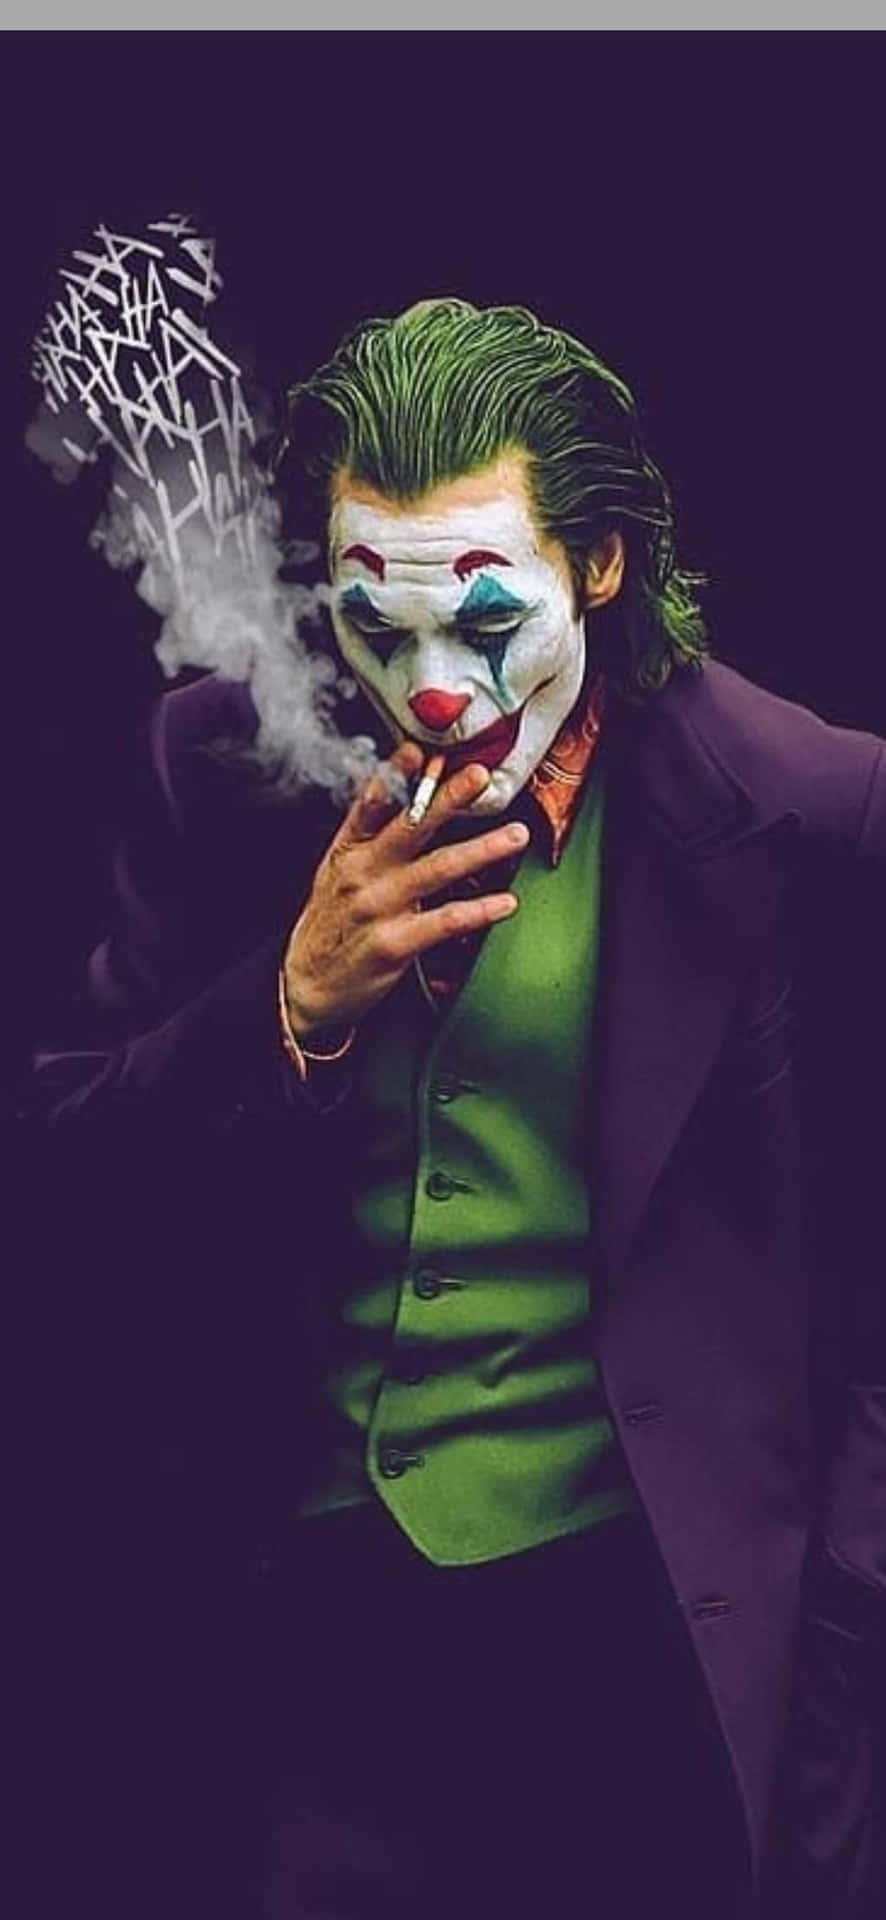 Download Cool Green Dangerous Joker Smoking Wallpaper | Wallpapers.com